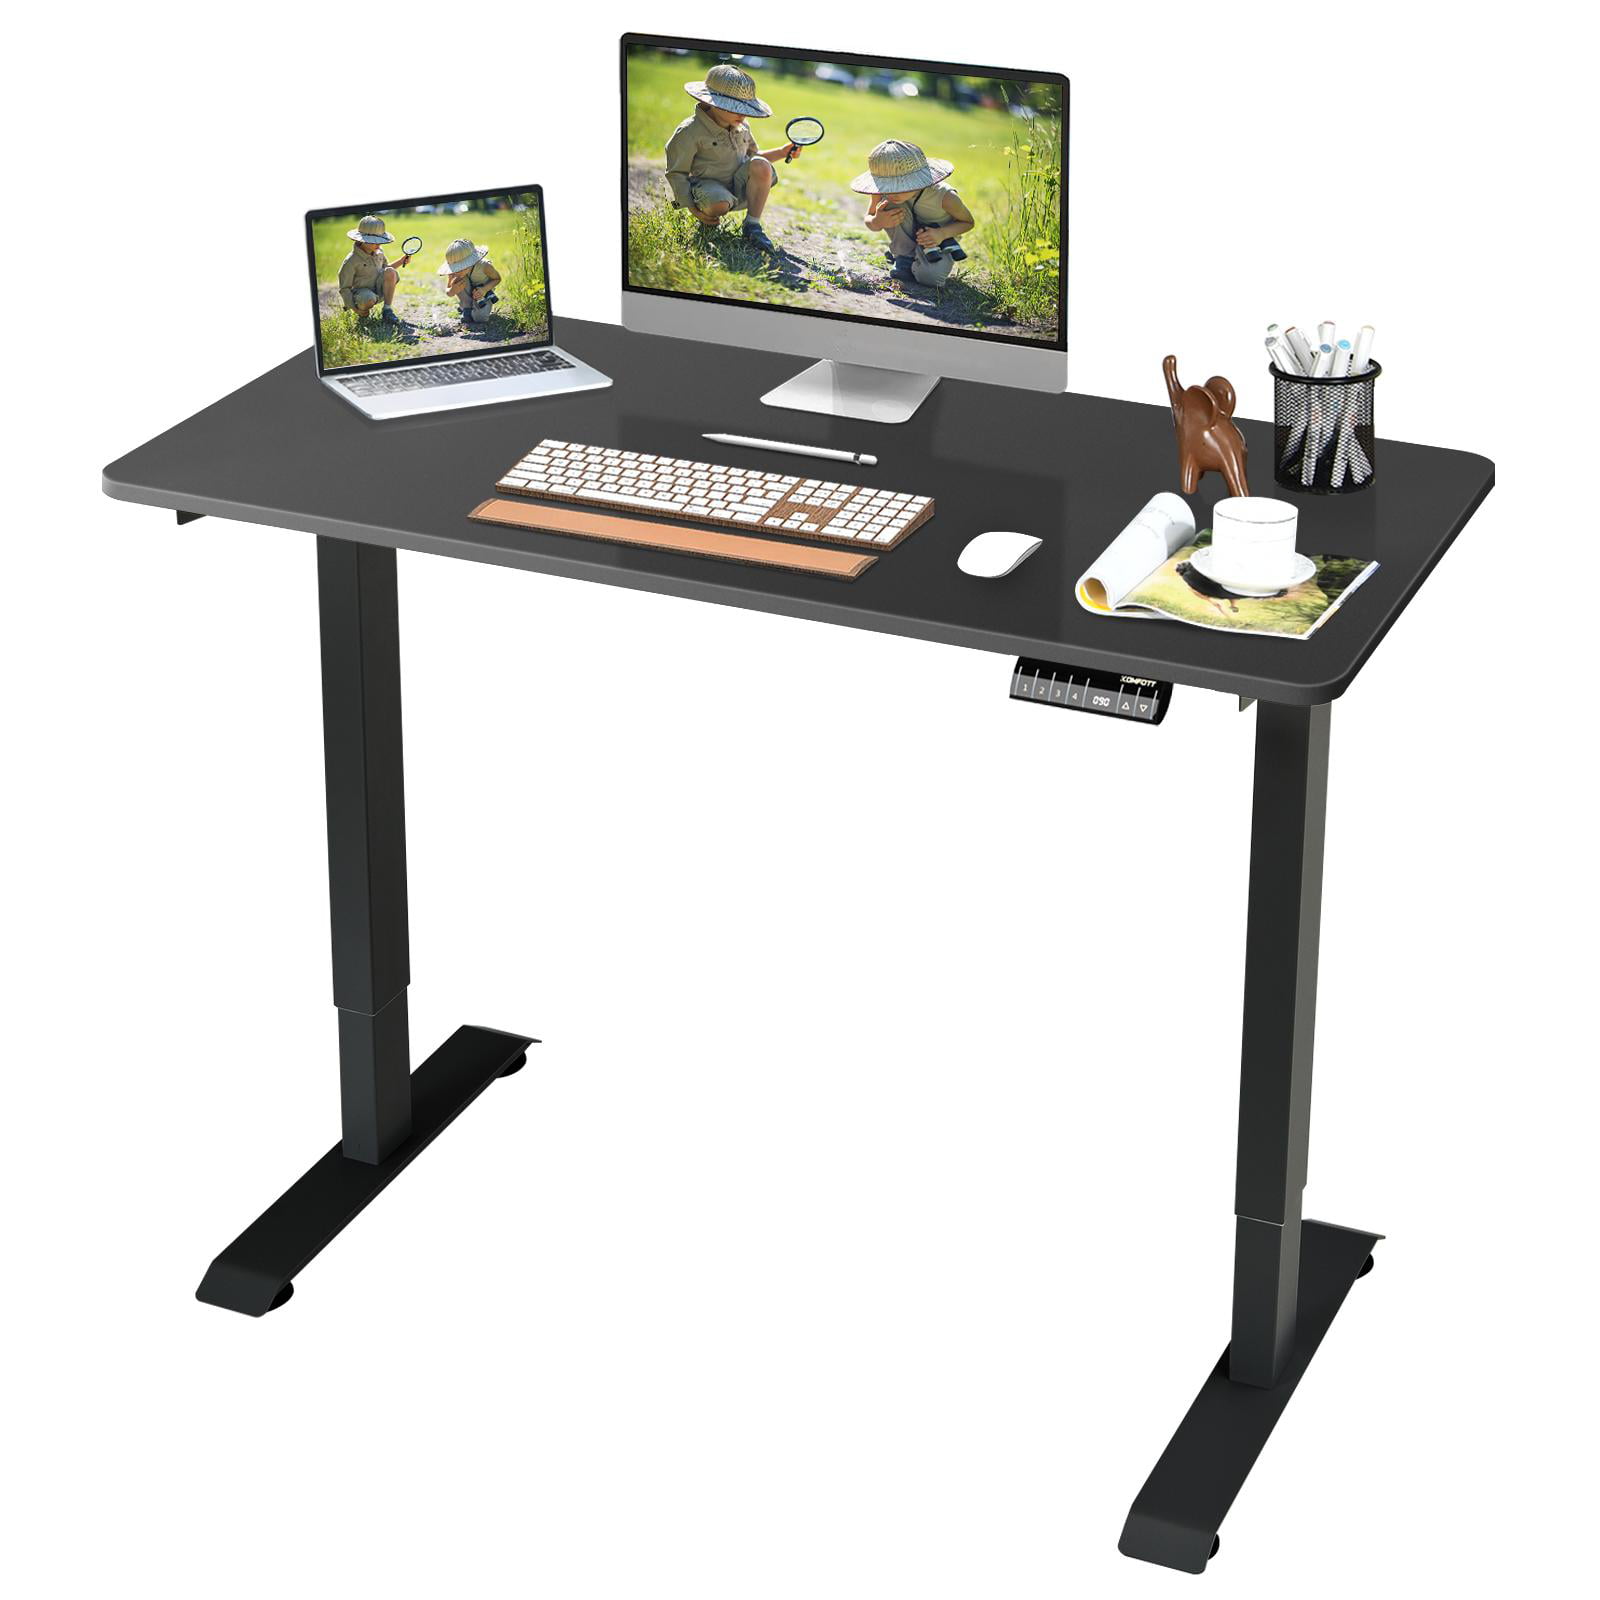 Giantexus HW62419 Giantex Standing Desk Anti-Fatigue Mat Not-Flat